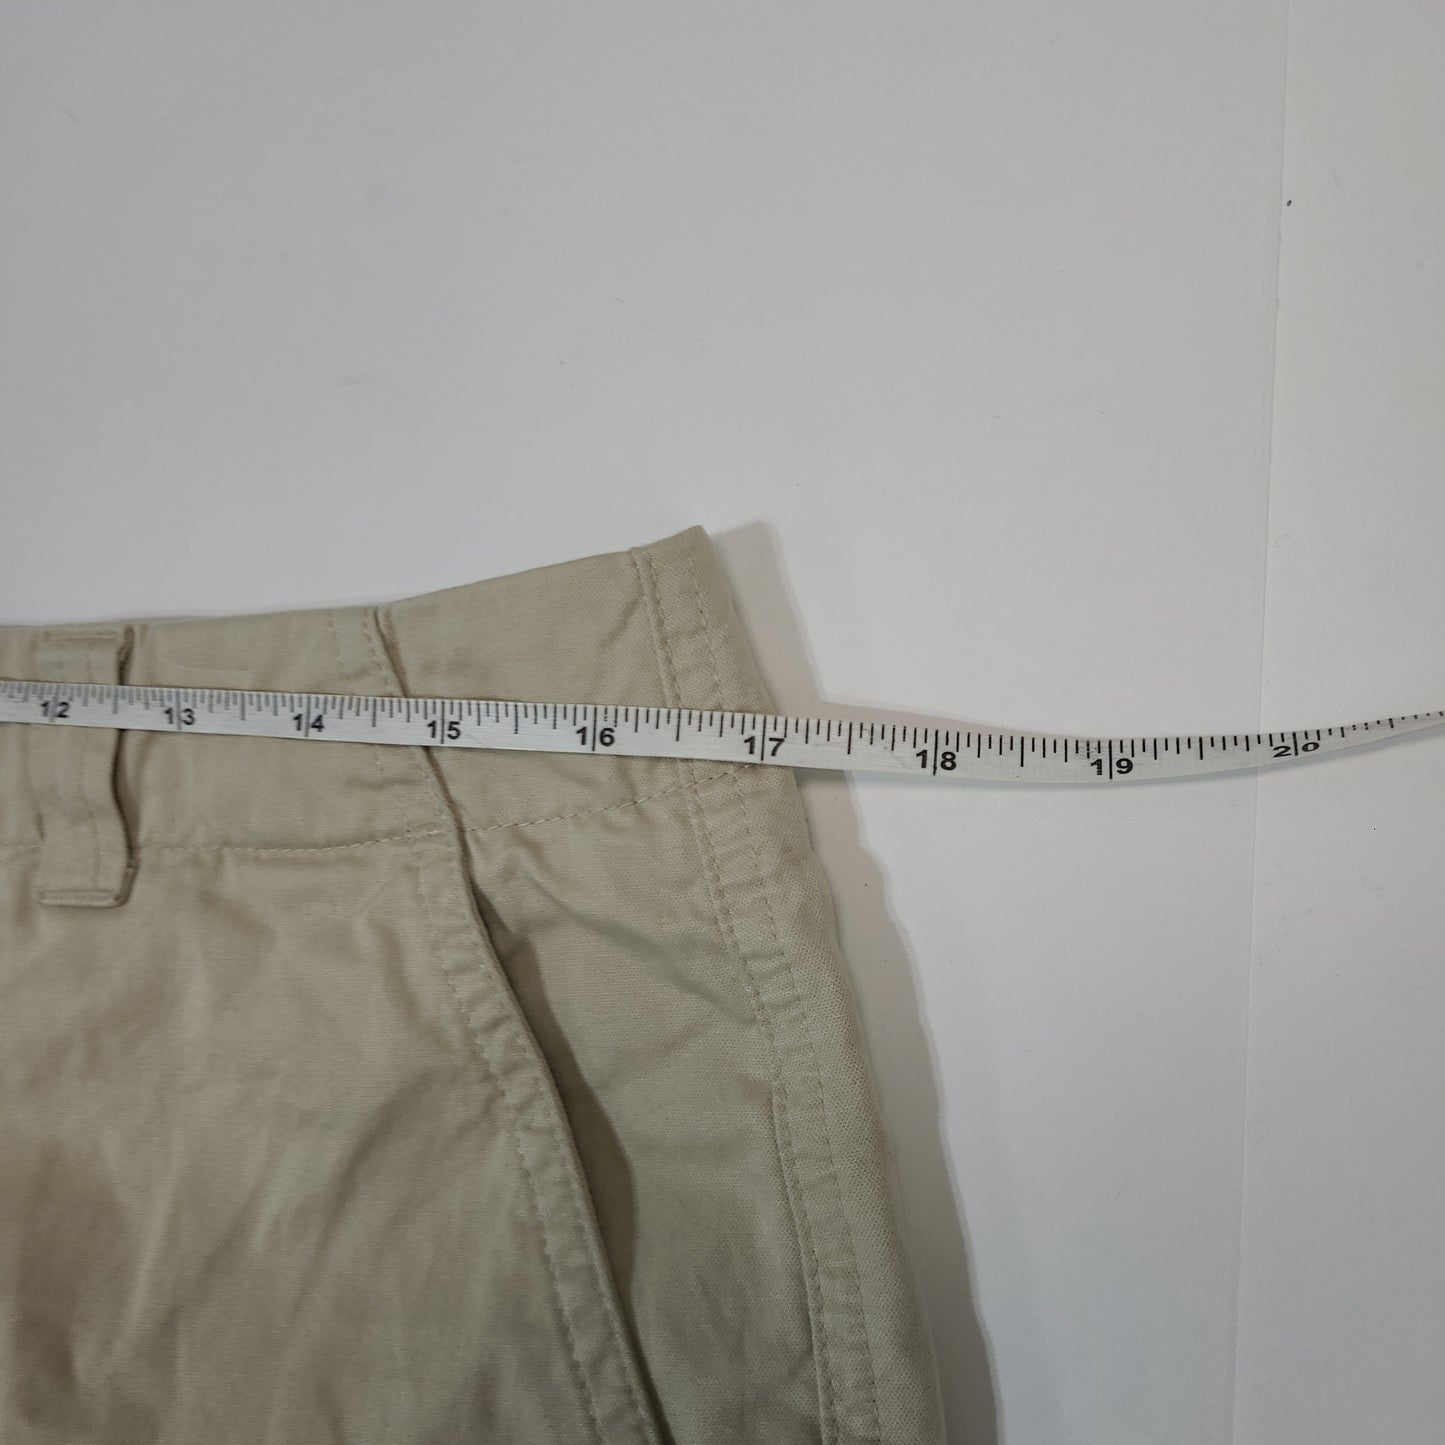 Lacoste Men's Chino Shorts Tan - Size 42